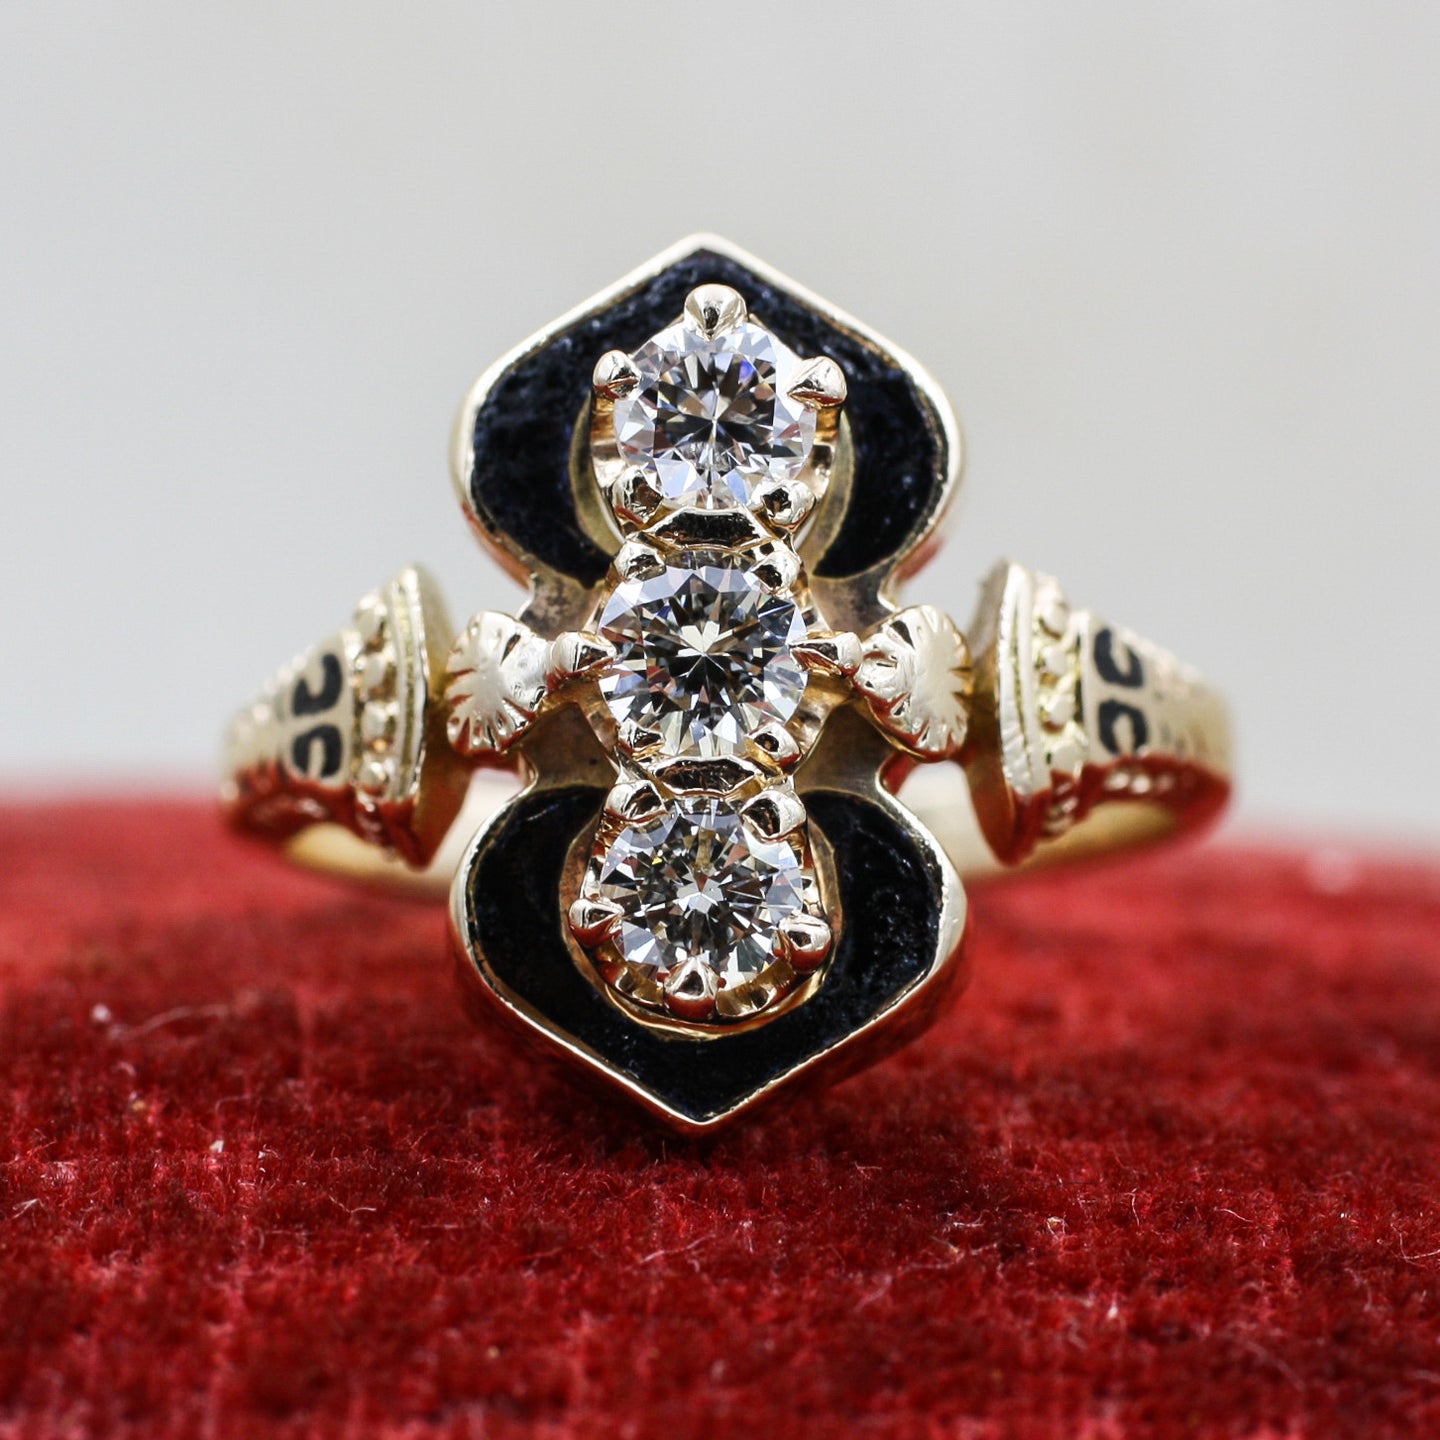 Vintage Diamond Ring w/ Black Enamel Details 14K Gold